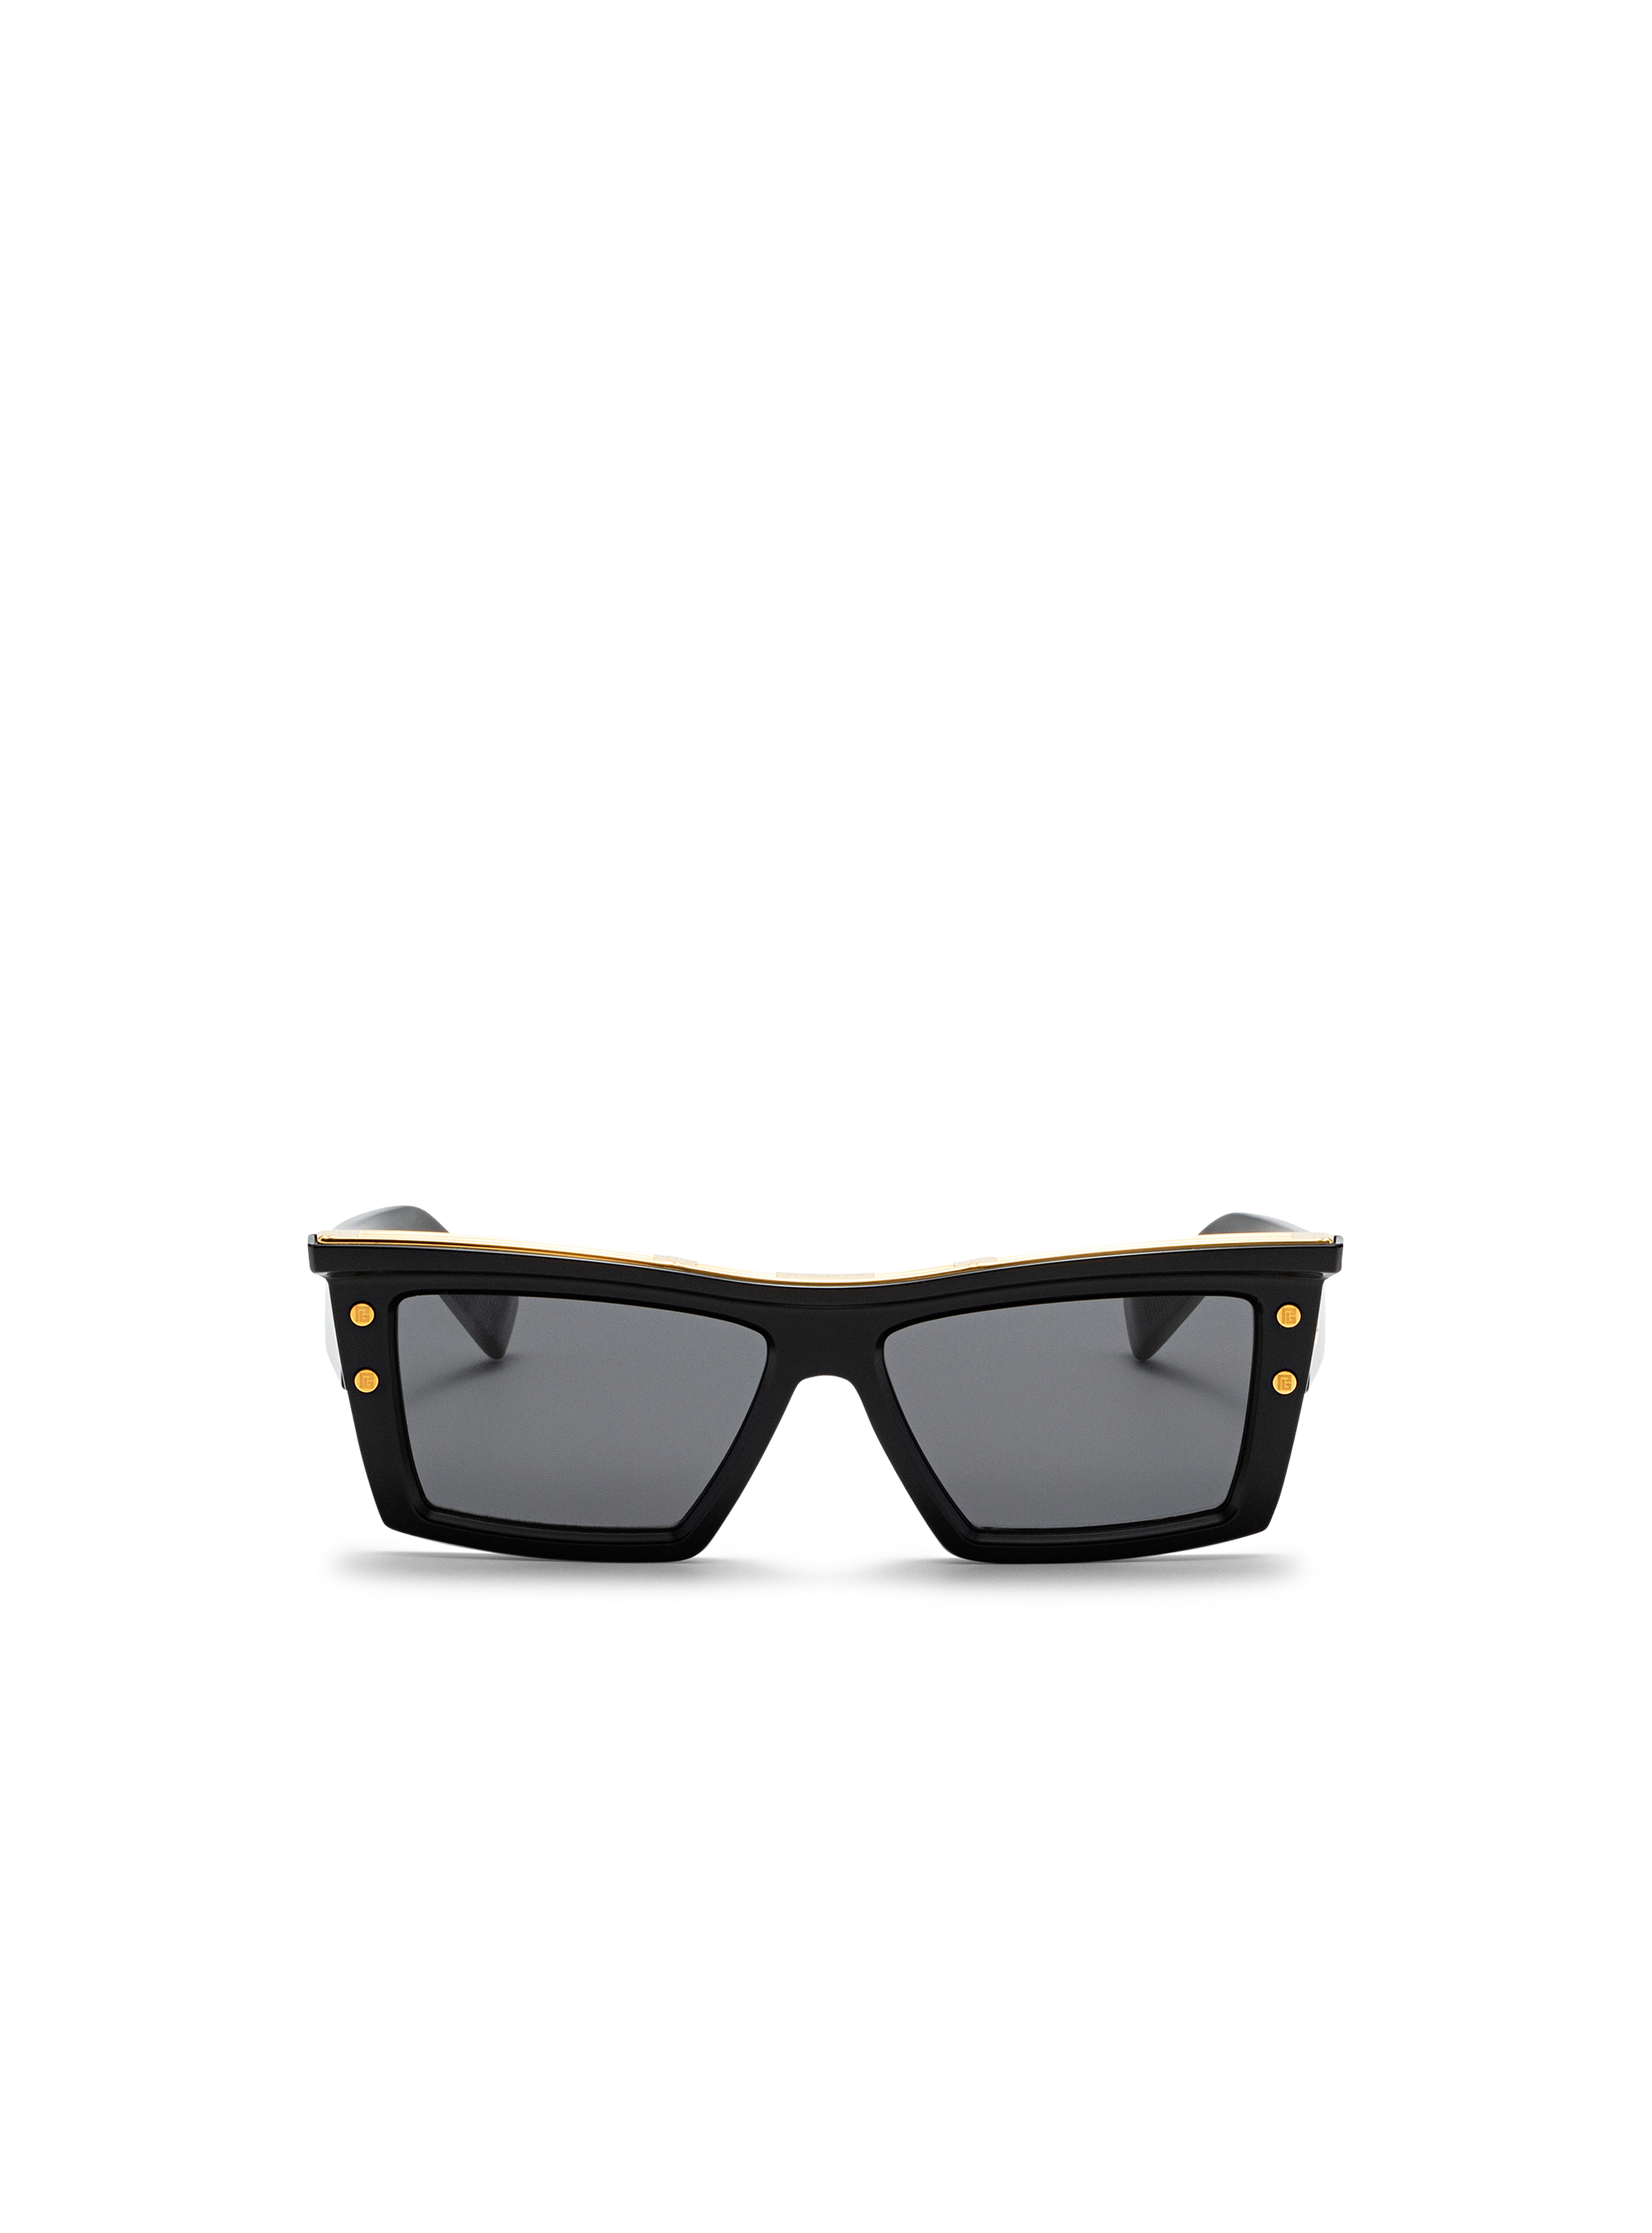 B-VII Sunglasses, black